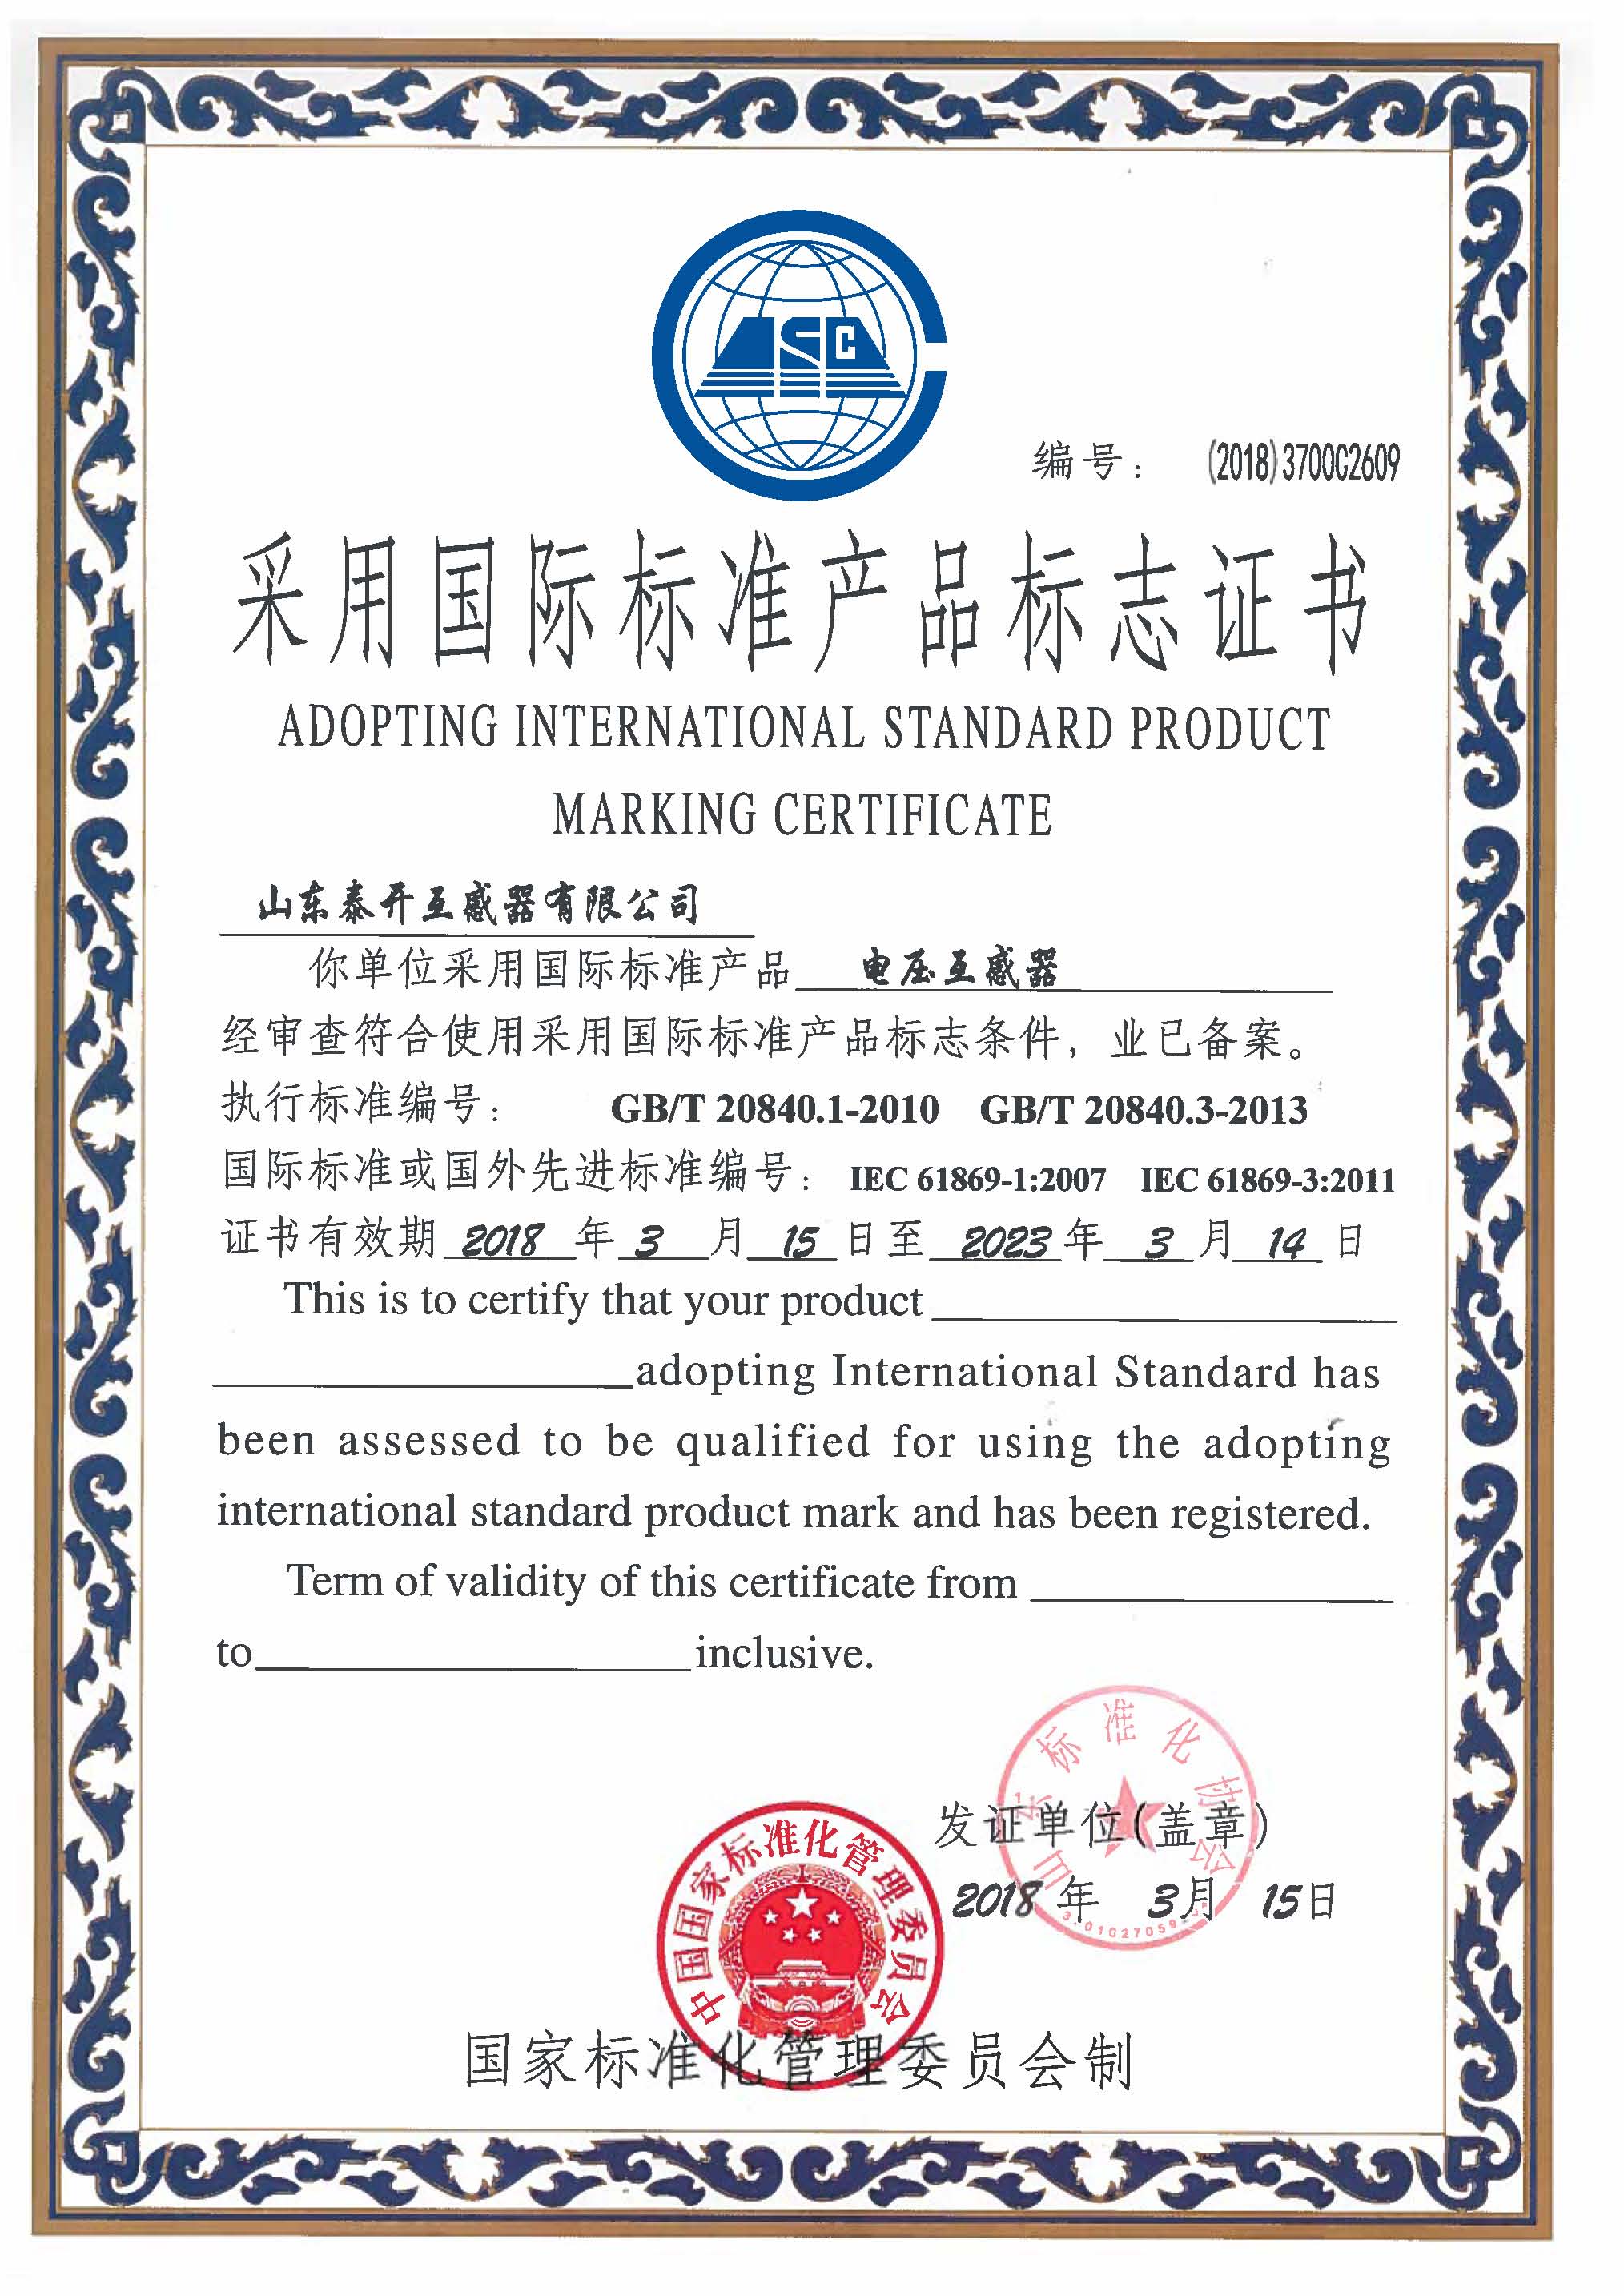 Adopt international standard product mark Certificate - voltage transformer